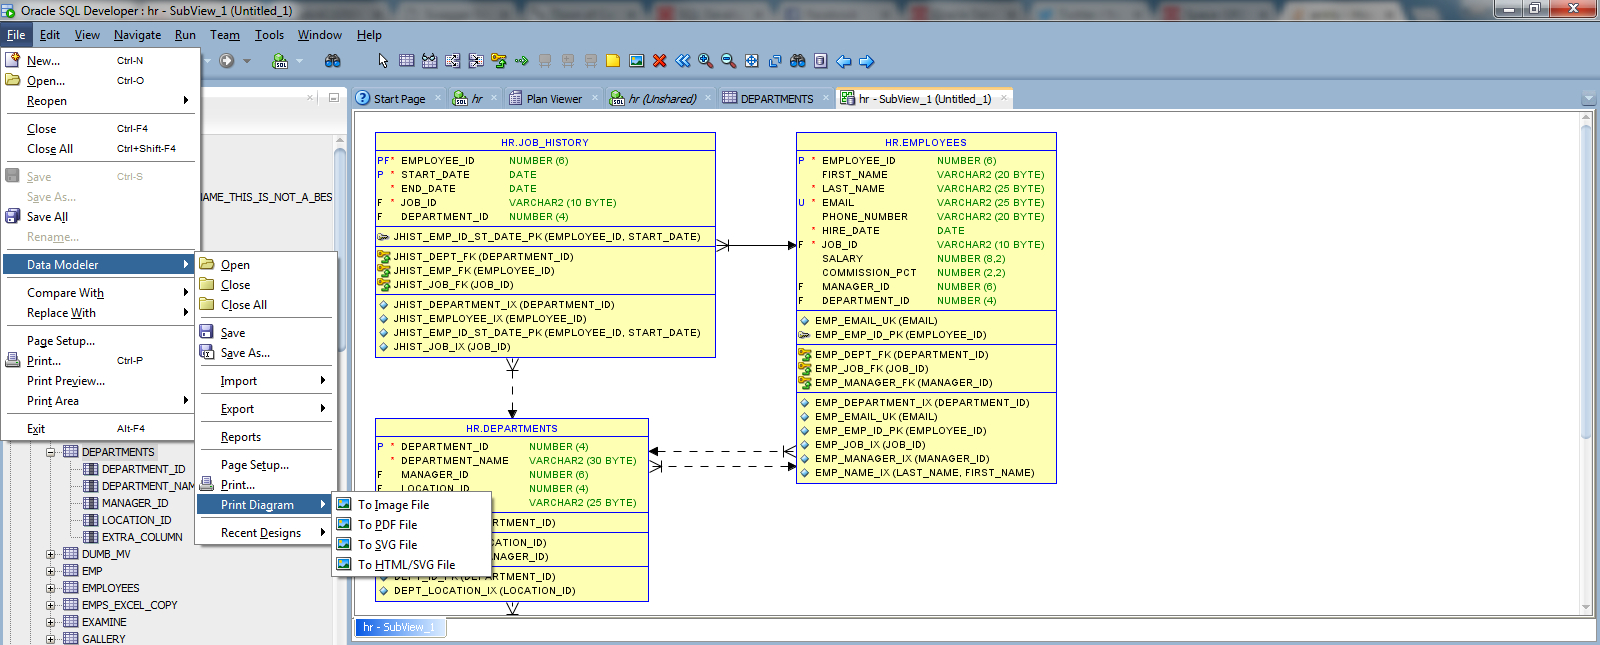 How To Export Erd Diagram To Image In Oracle Data Modeler regarding Er Diagram From Sql Developer